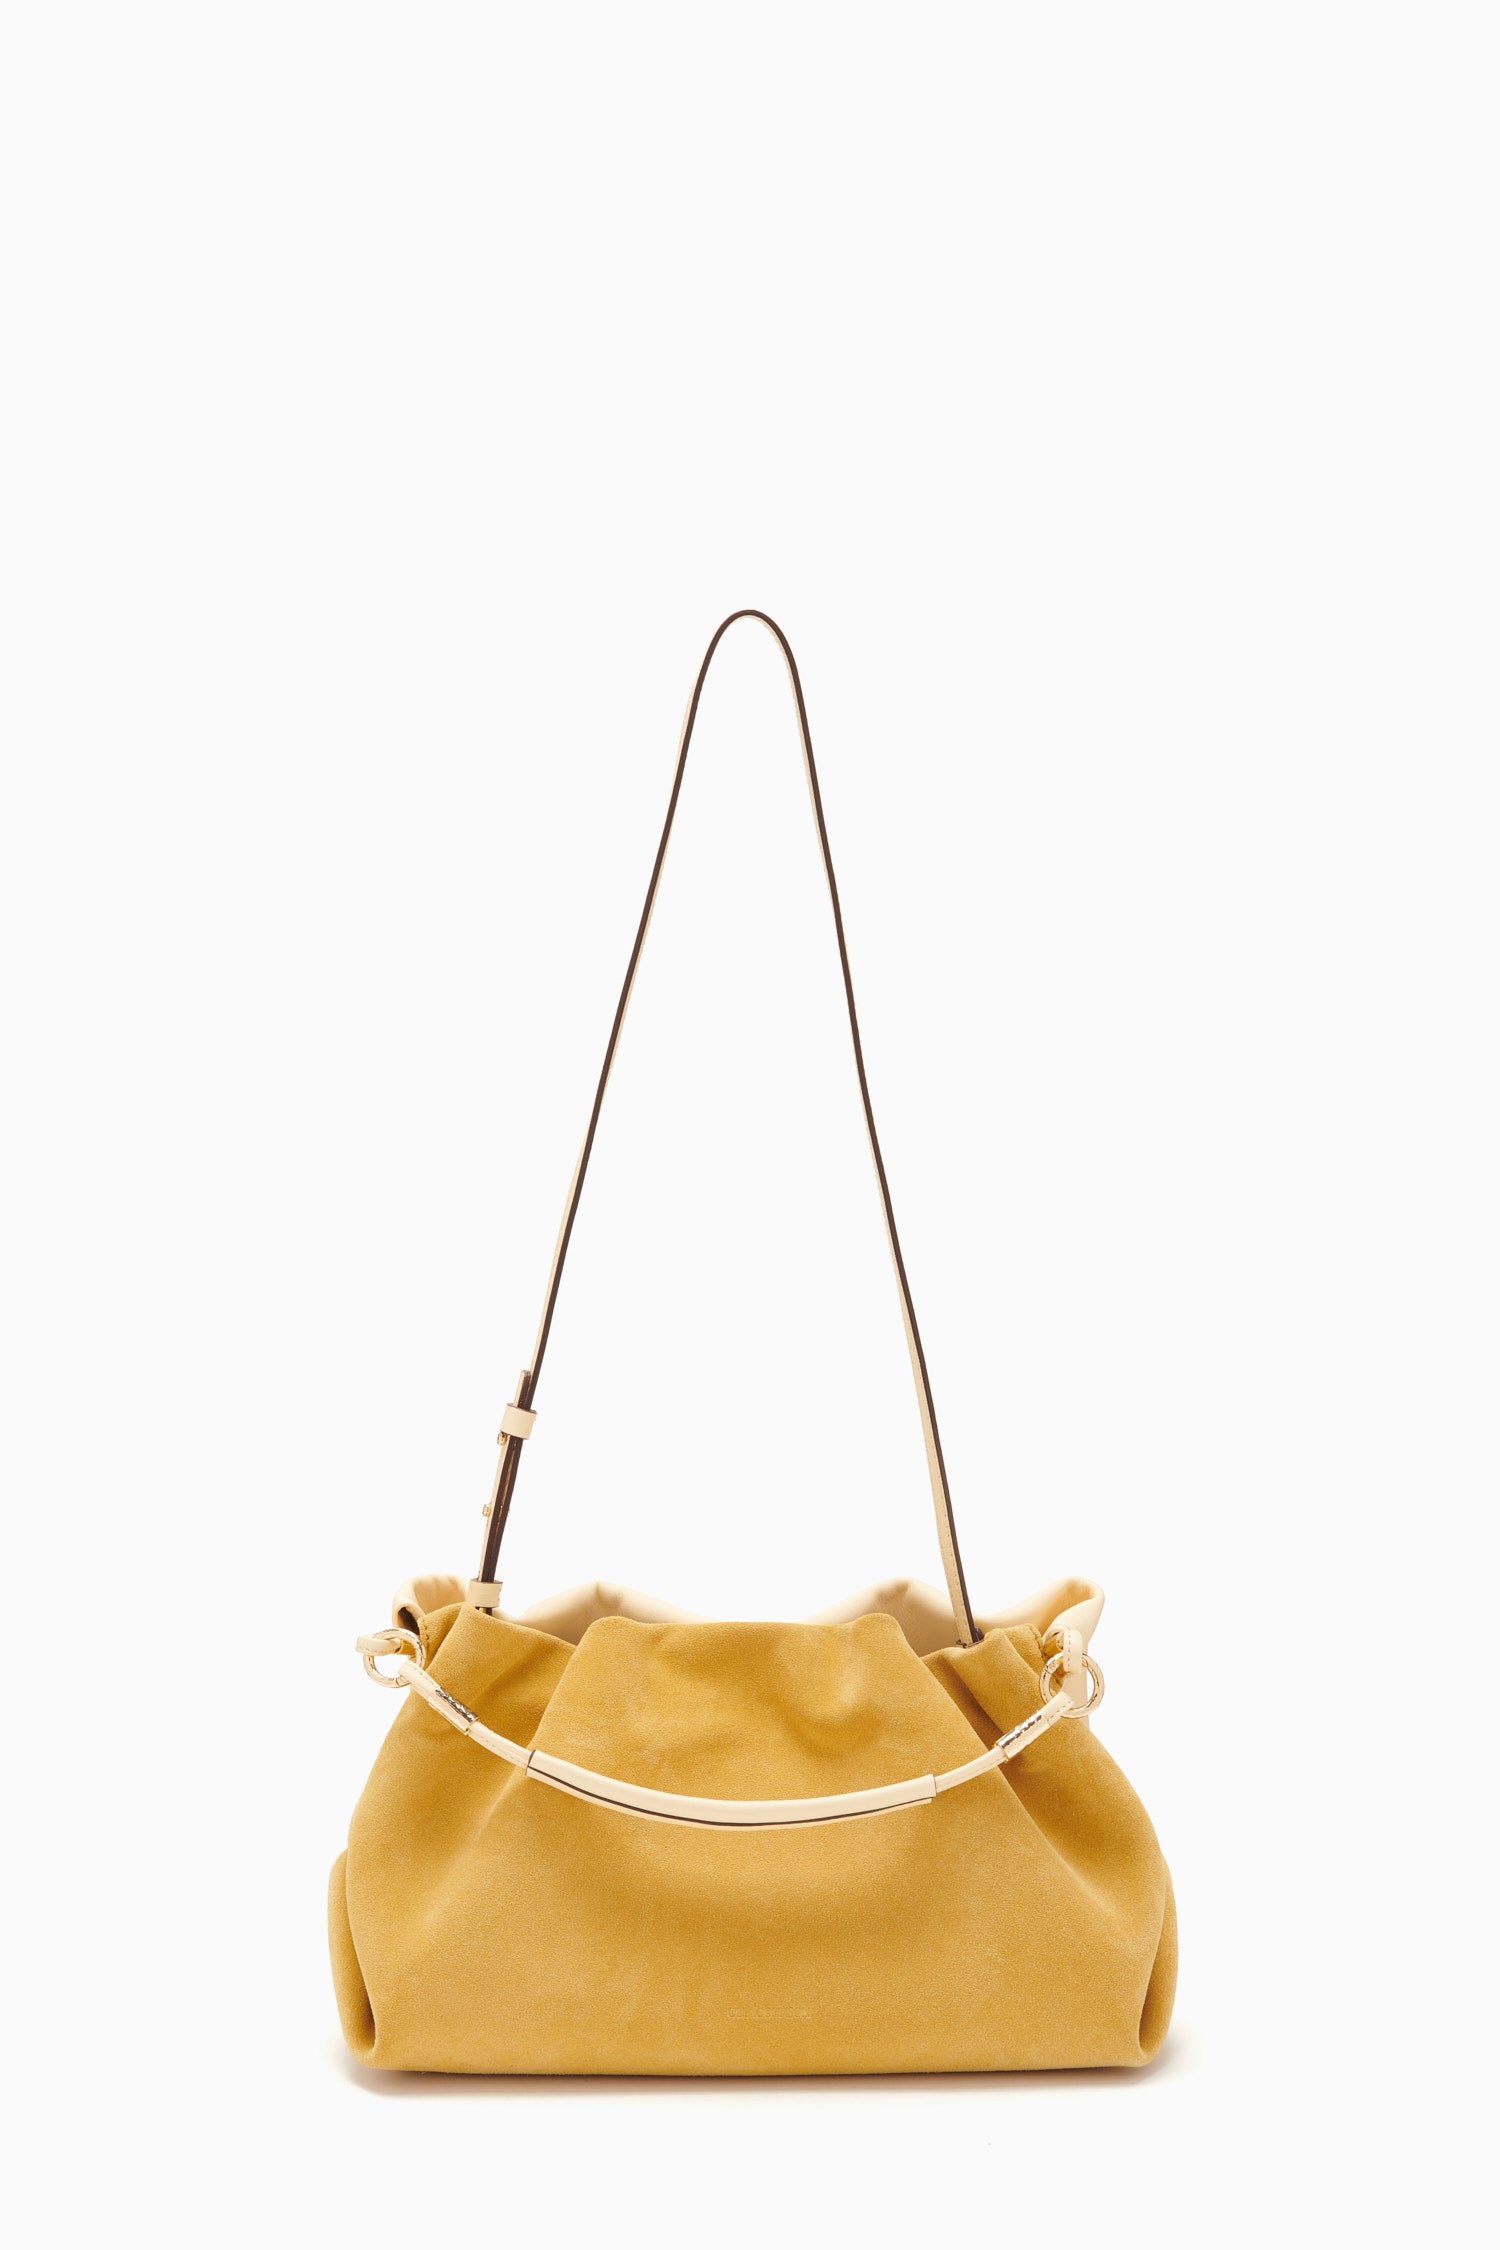 Ulla Johnson Women's Remy Soft Convertible Clutch Handbag